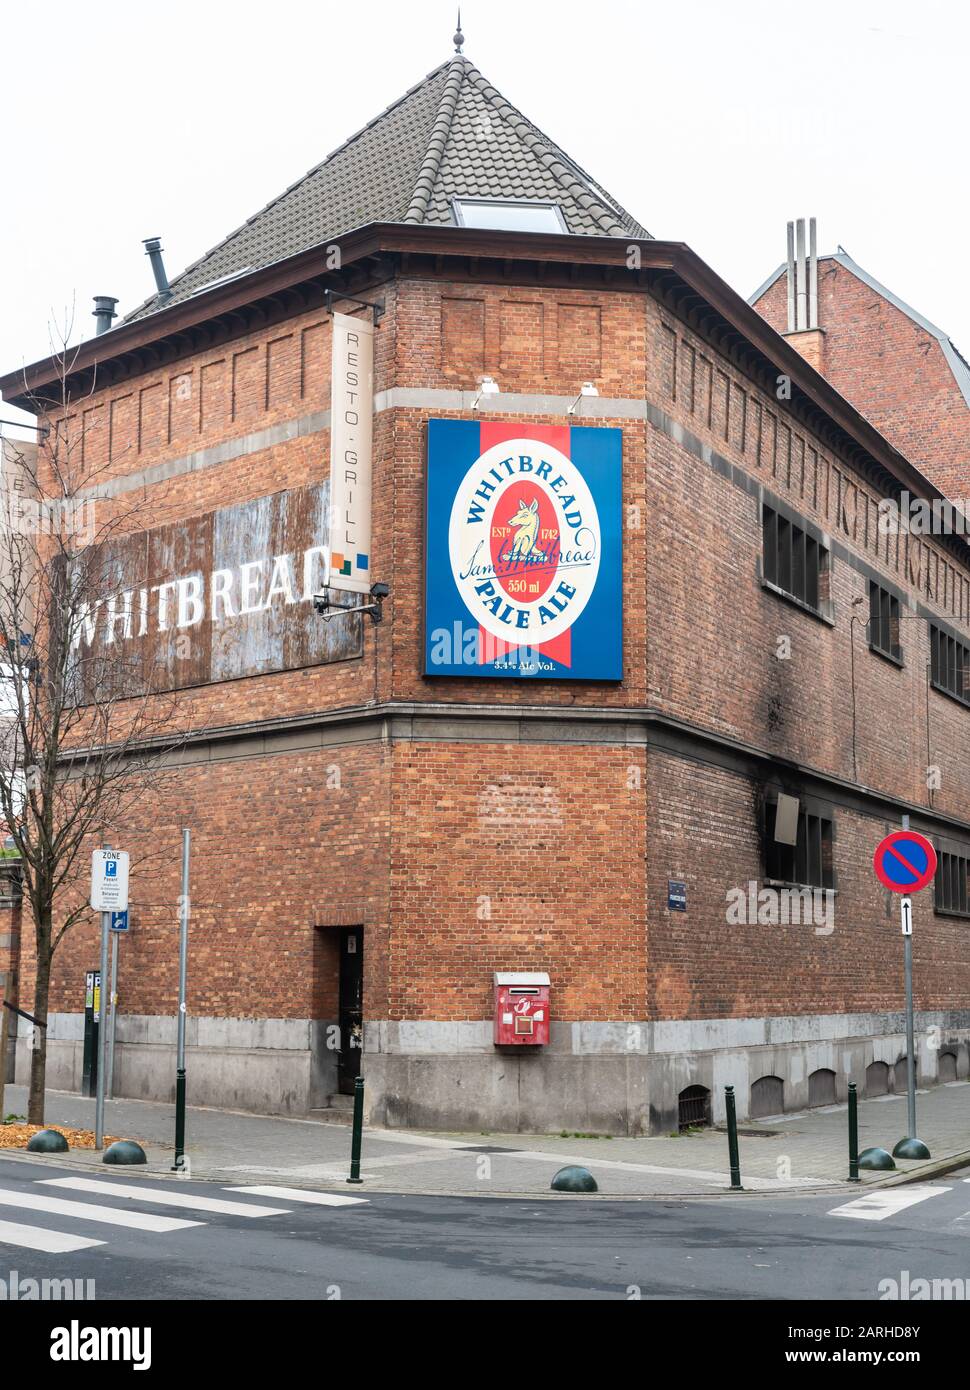 Molenbeek, Brussels Capital Region / Belgium - 01 25 2020: Old Industrial building and publicity billboard of Whitbread pale ale beer Stock Photo